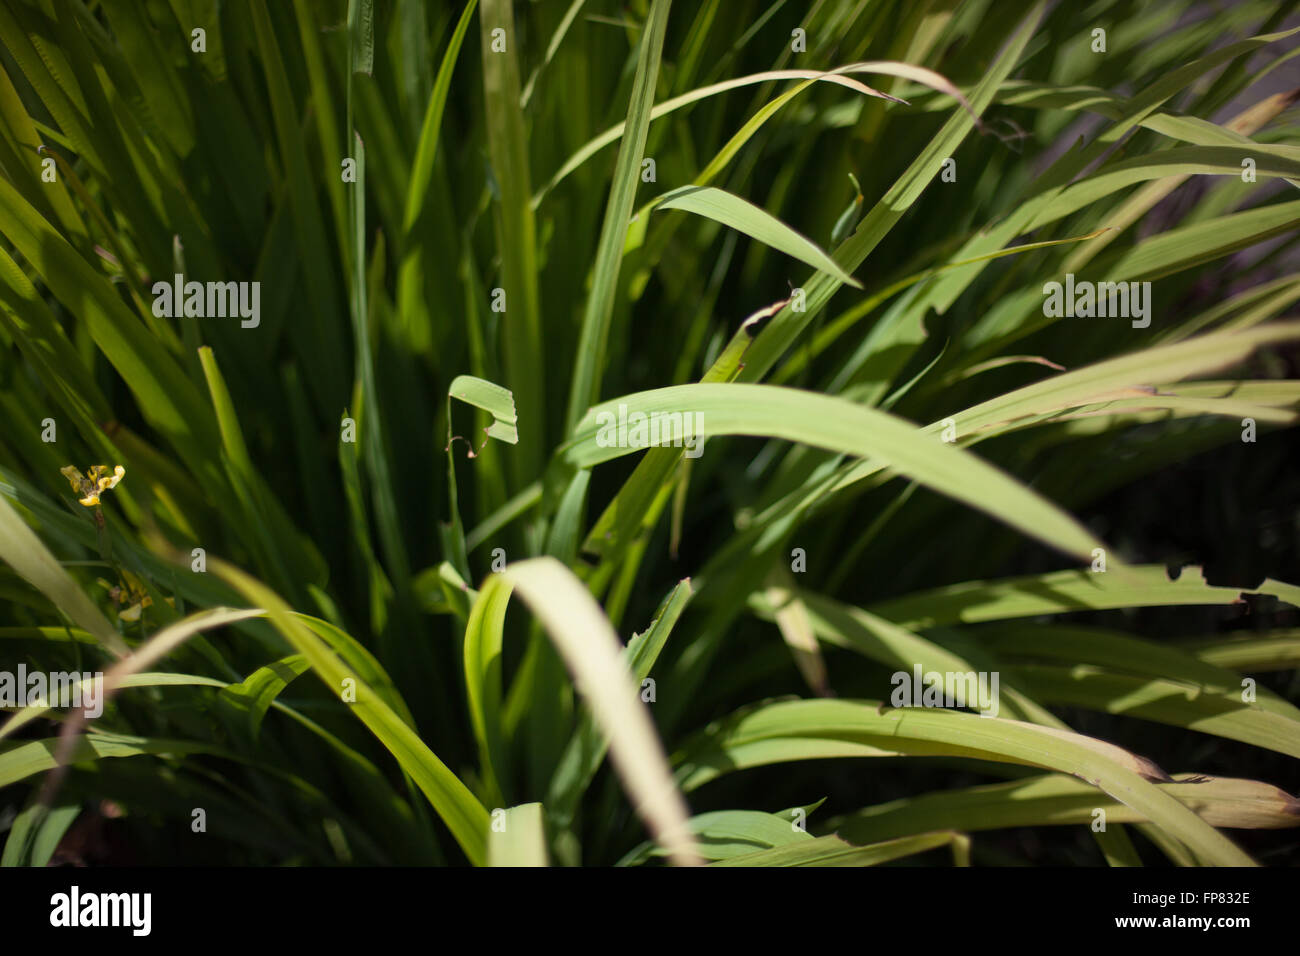 Full Frame Of Green Grass In Field Stock Photo